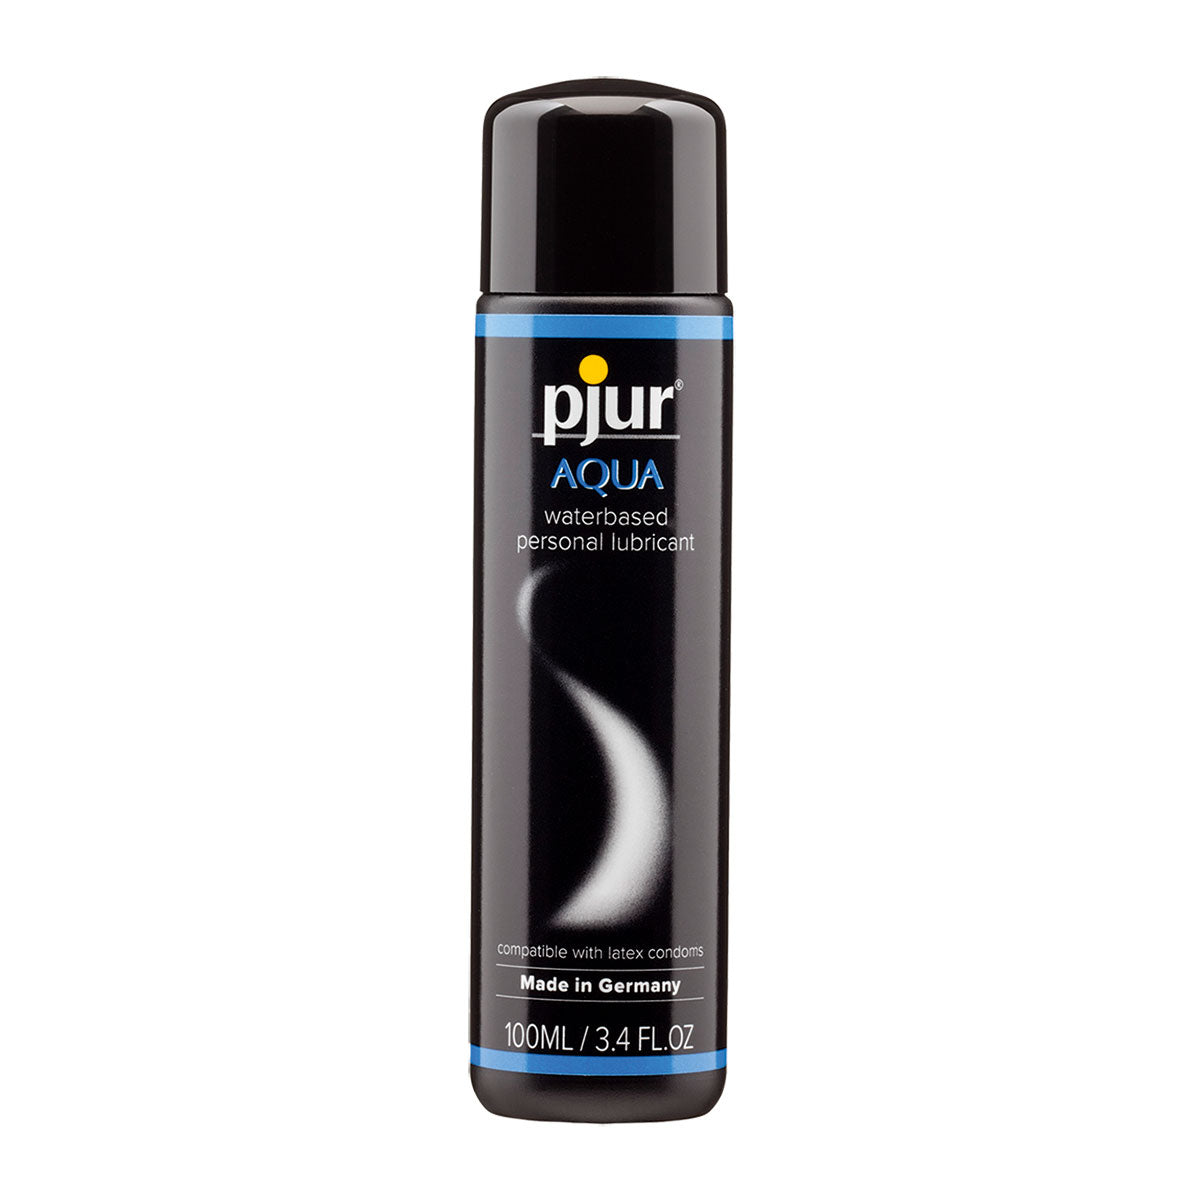 Pjur Aqua Premium Water-Based Personal Lubricant - 100ml